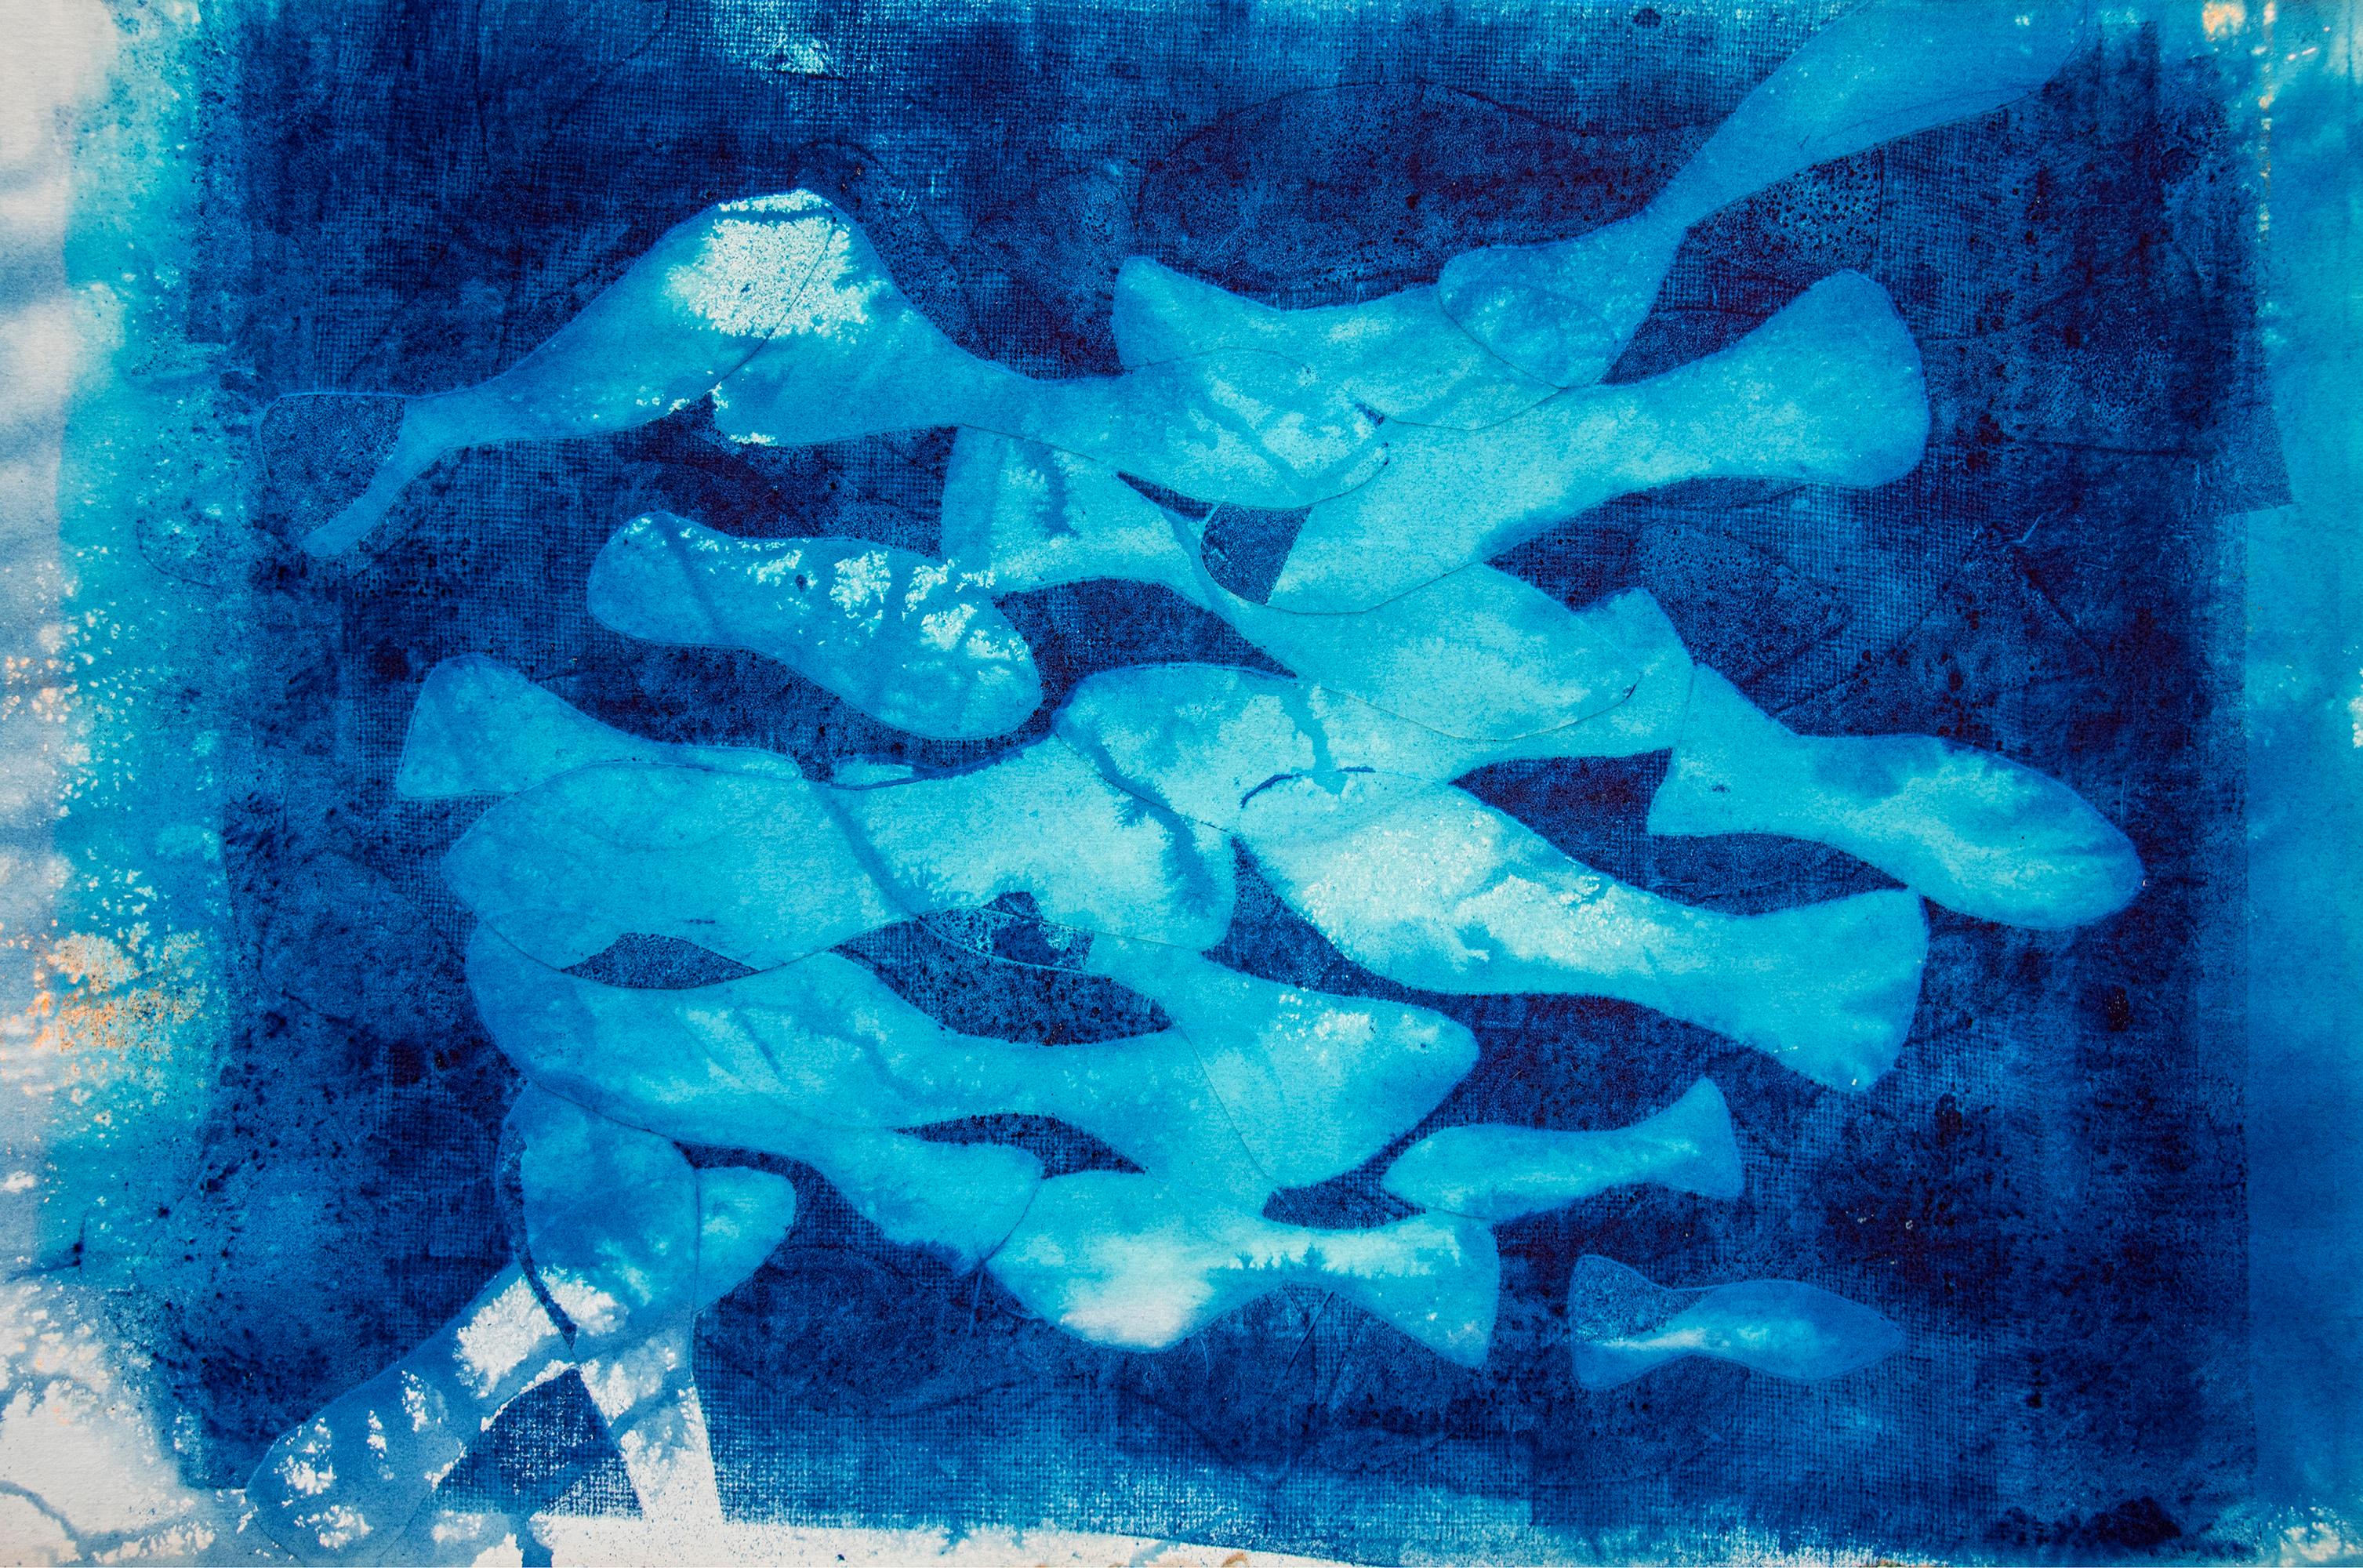 Marina Abismal, Mixed Media Painting, Blue Tones, Mediterranean Fish Patterns